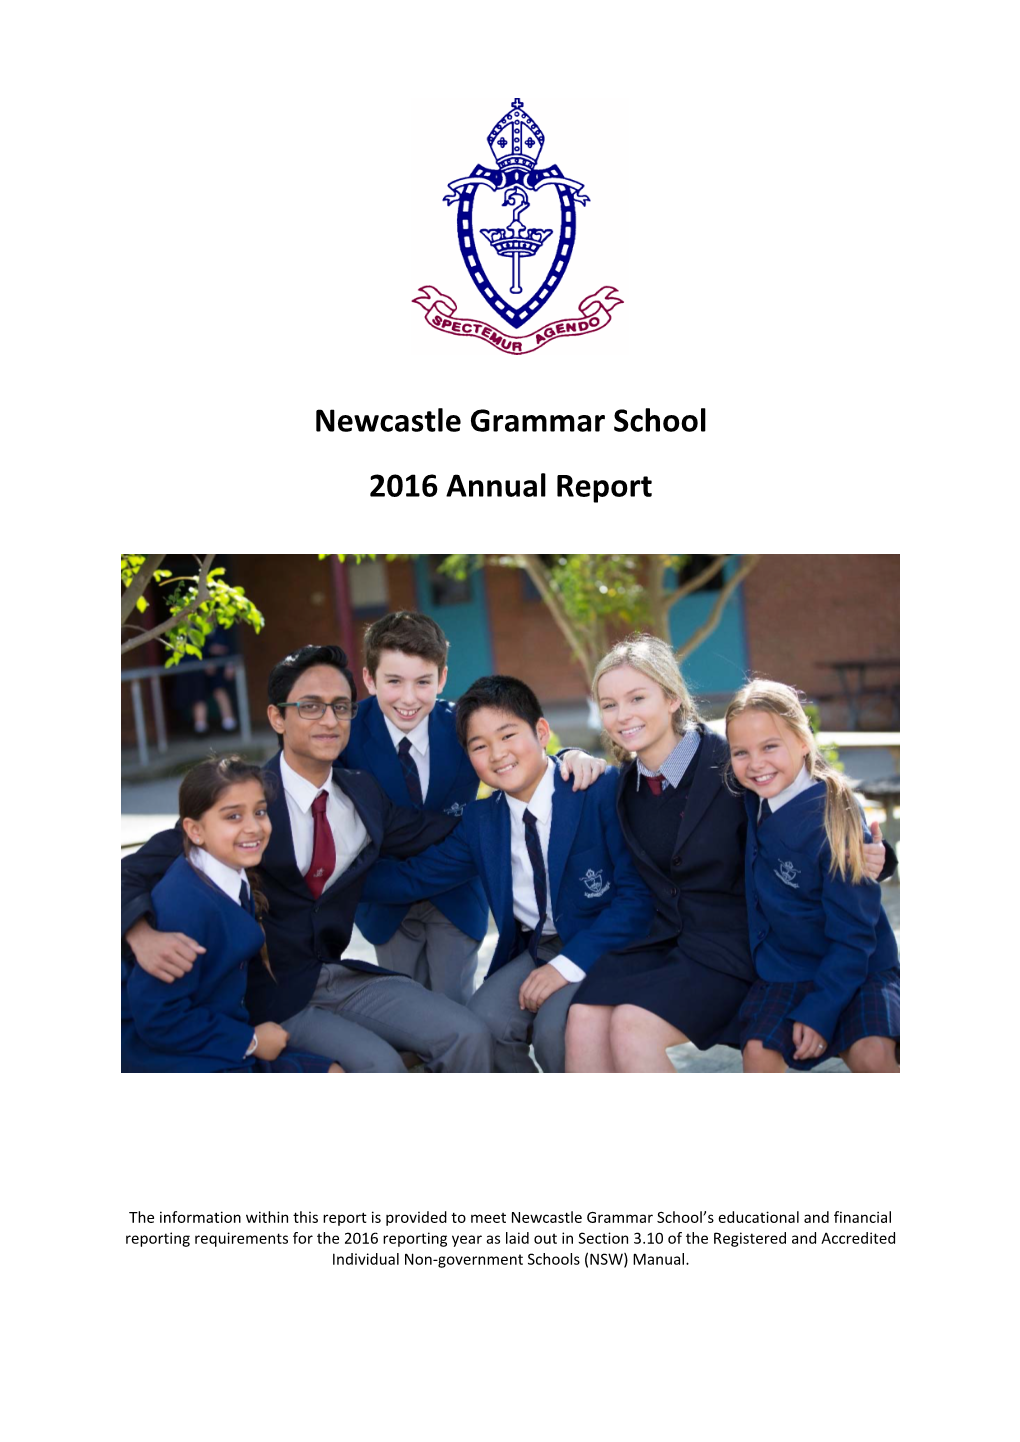 Newcastle Grammar School 2016 Annual Report